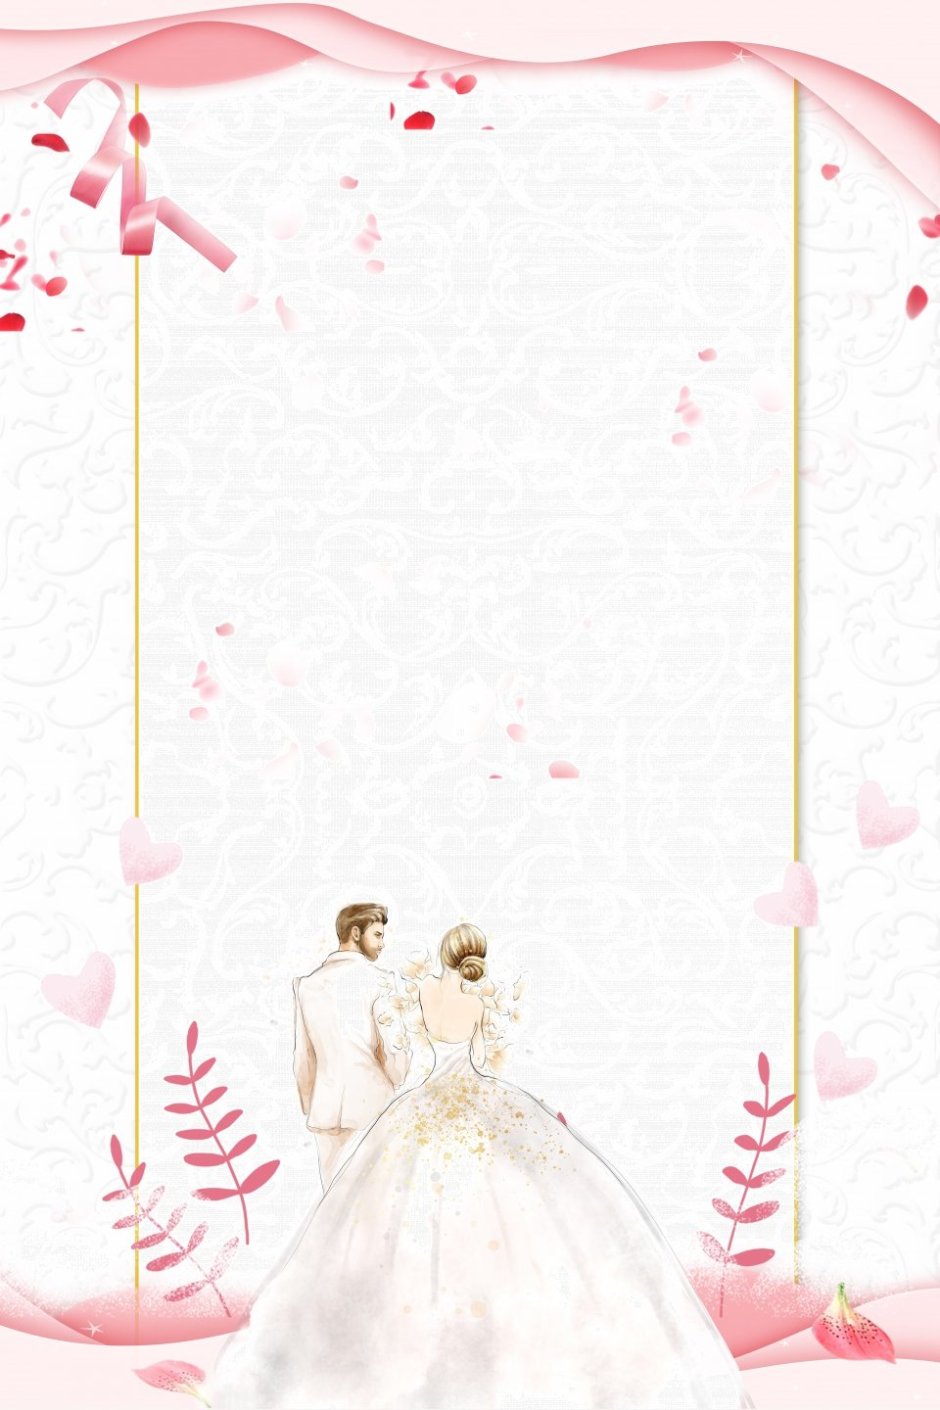 Фон для свадебного плаката